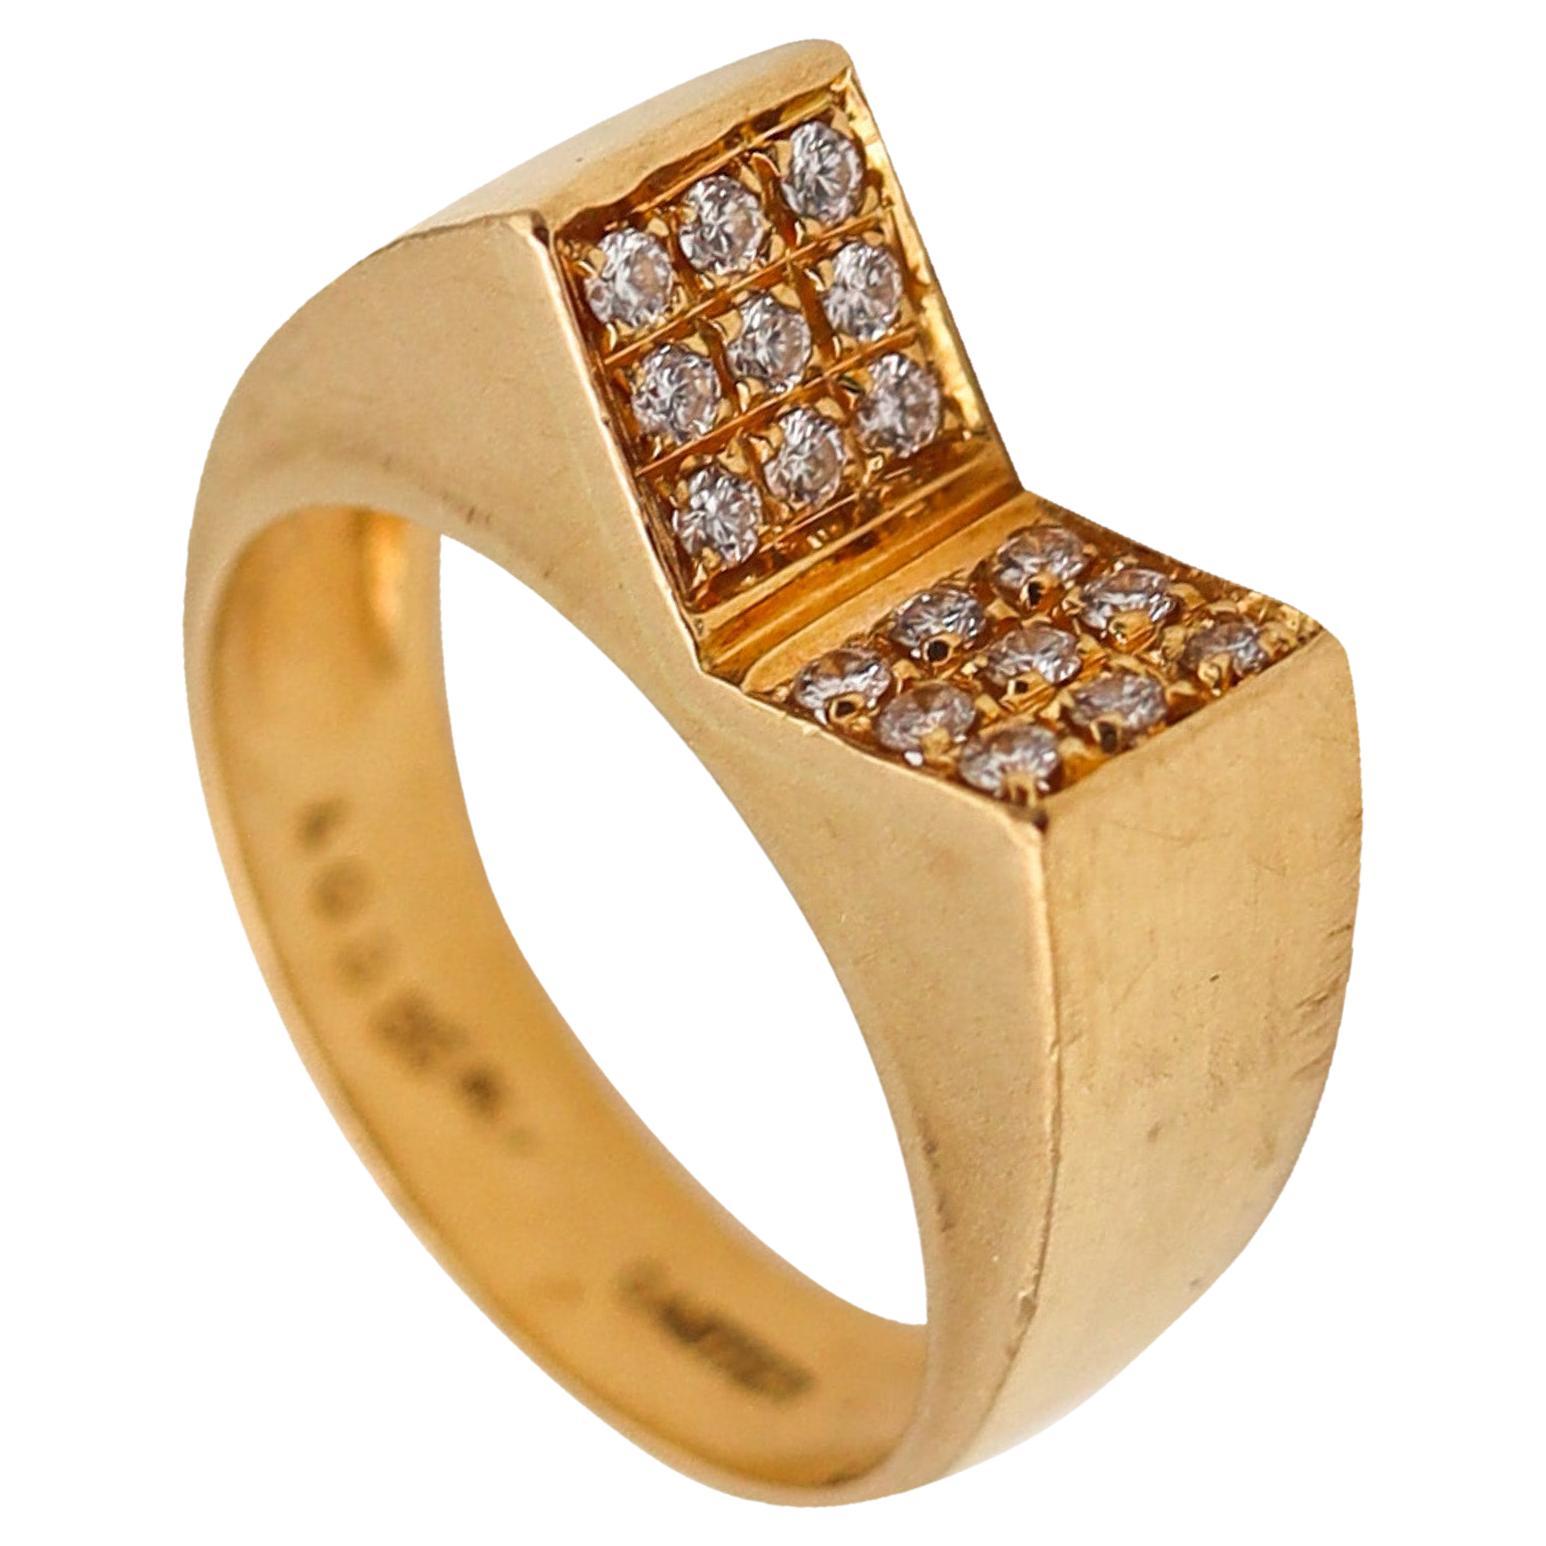 Cartier 1970 Geometric Modernist Ring in 18 Karat Yellow Gold with Diamonds